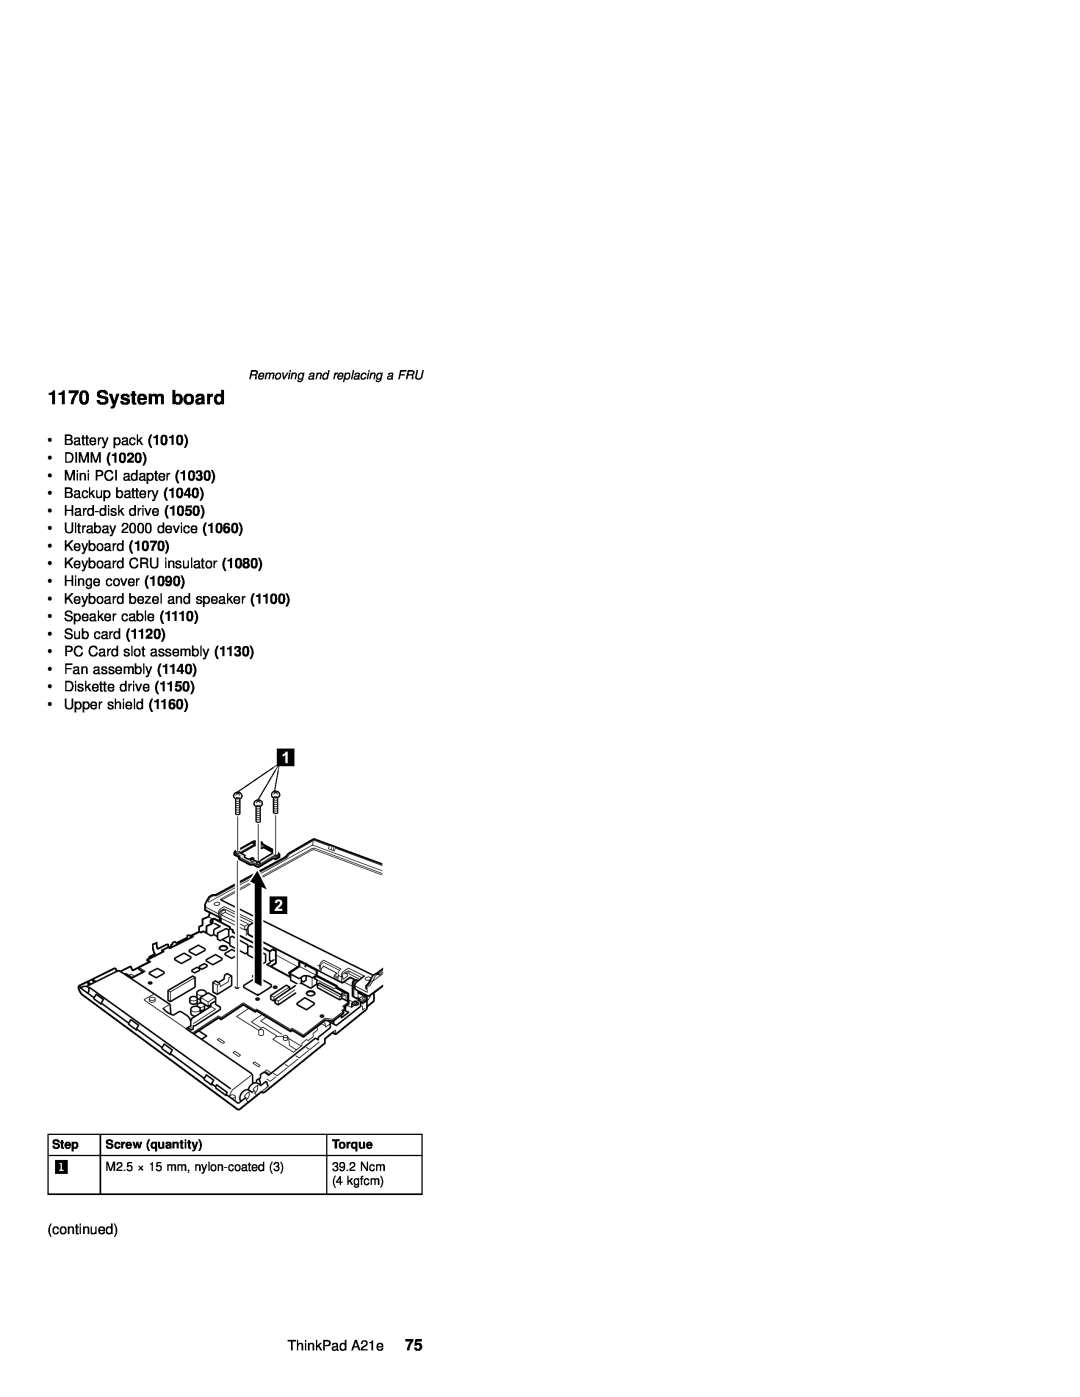 IBM MT 2632 manual System board, v DIMM 